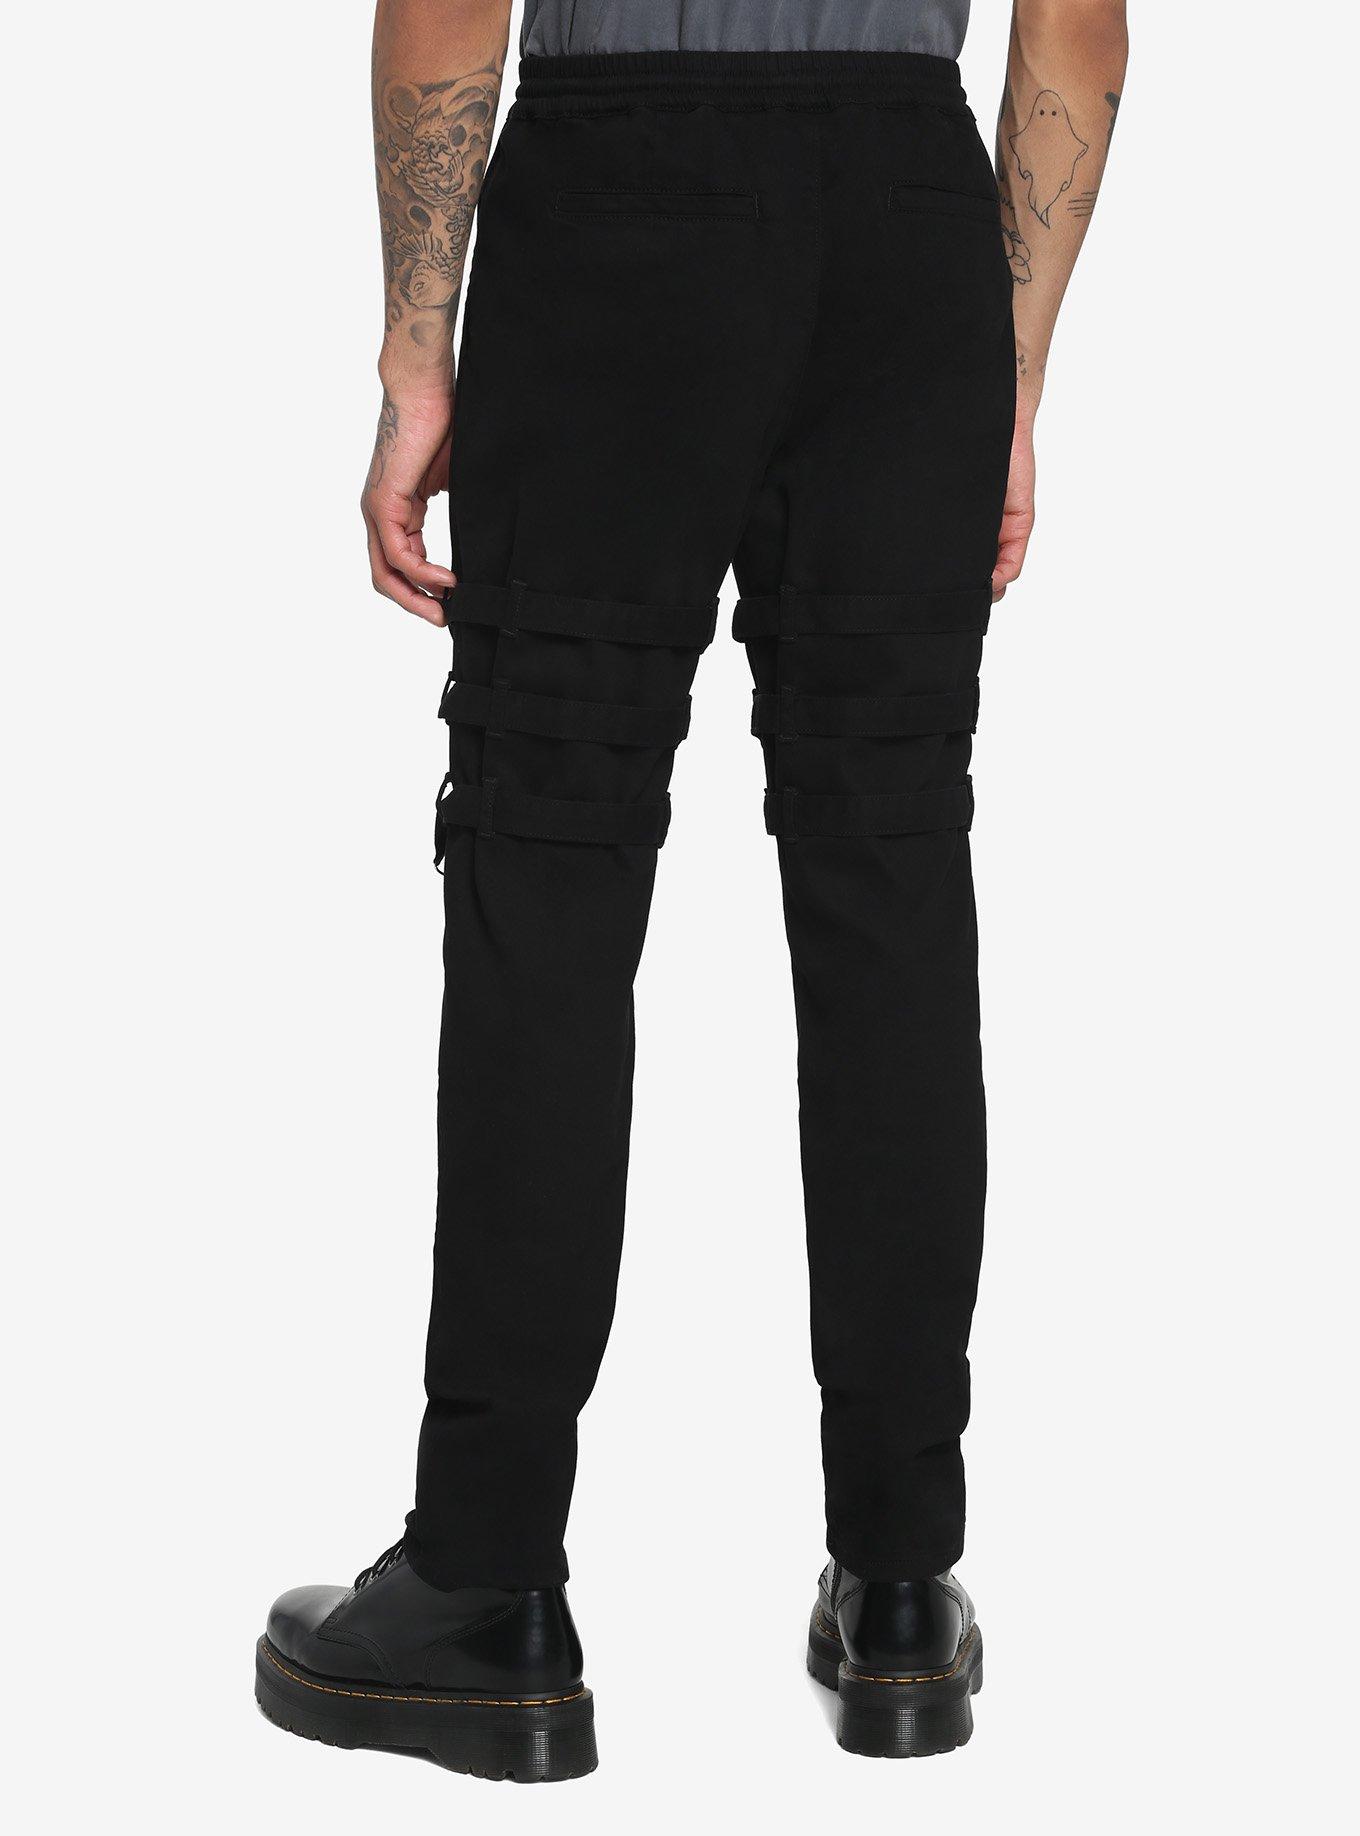 Black Buckle Jogger Pants, BLACK, alternate